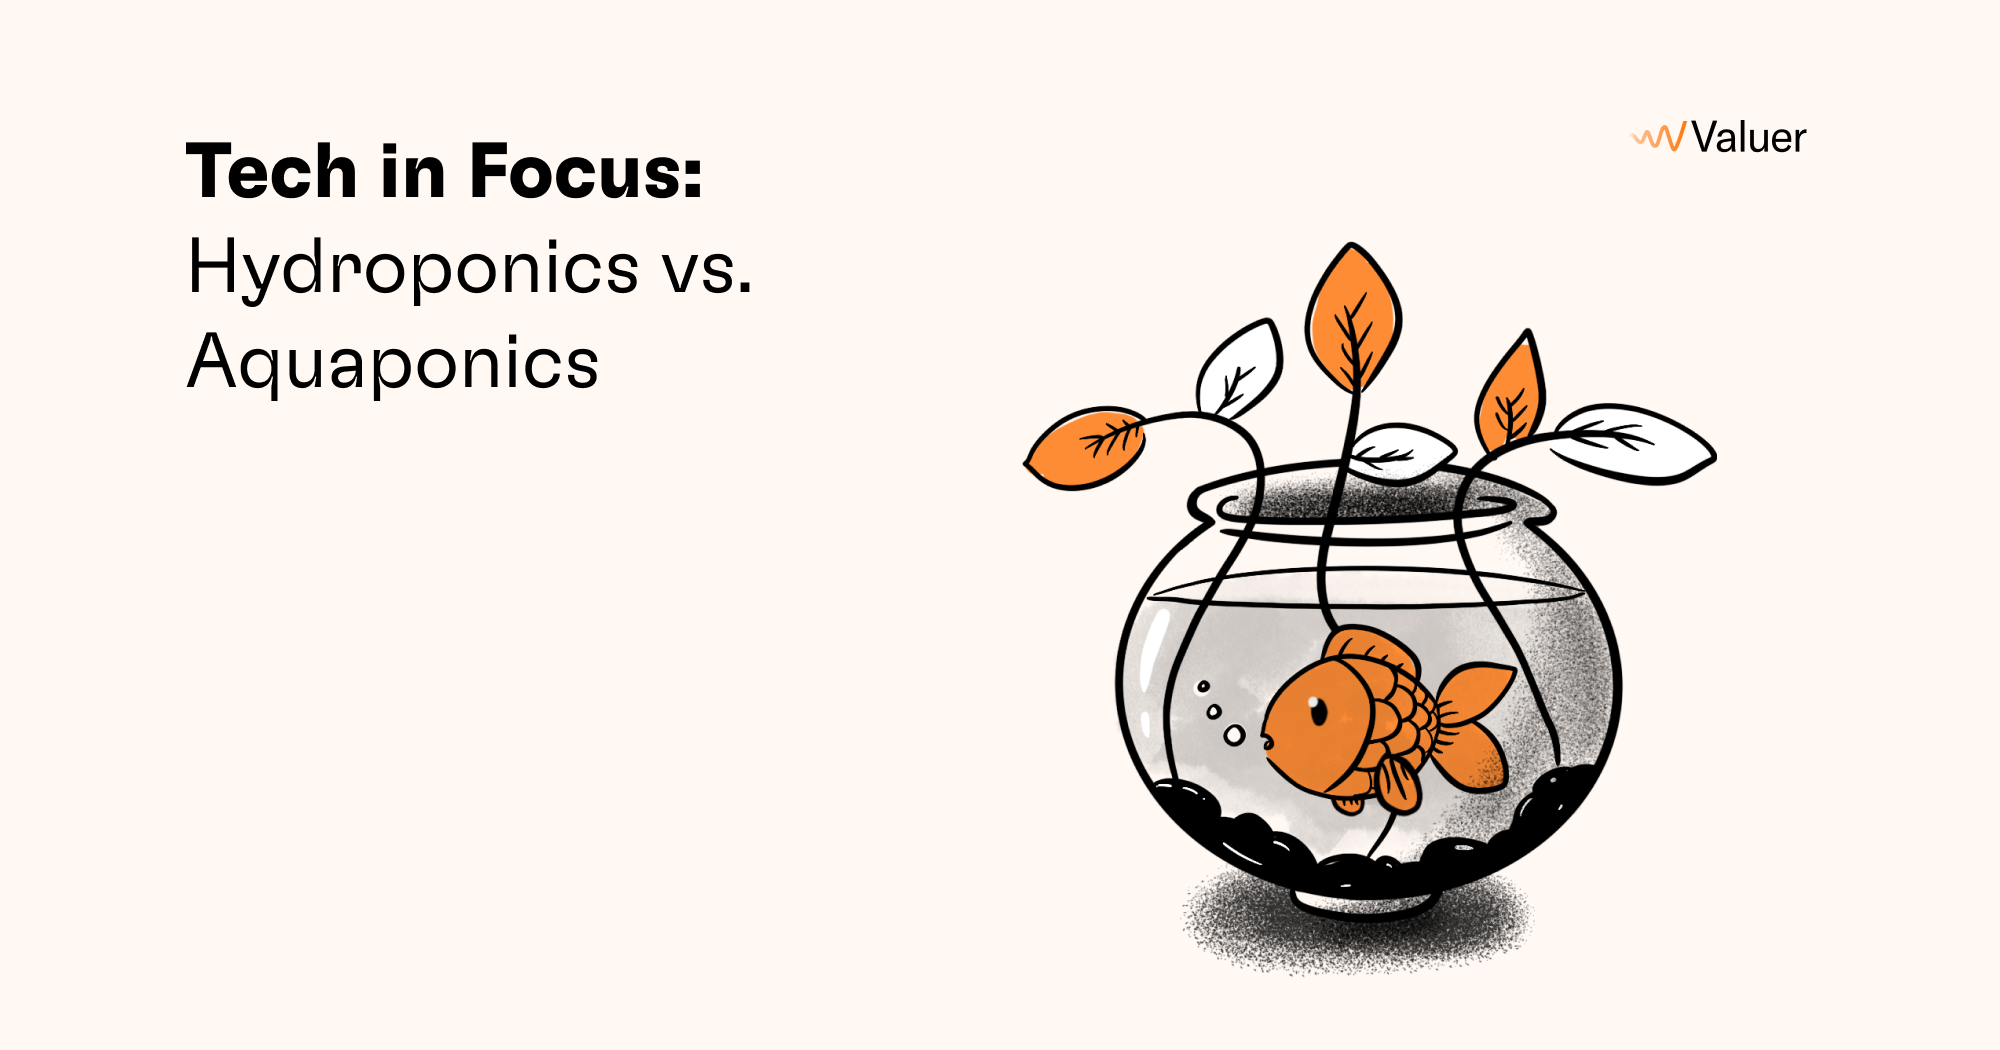 Tech in Focus: Hydroponics vs. Aquaponics